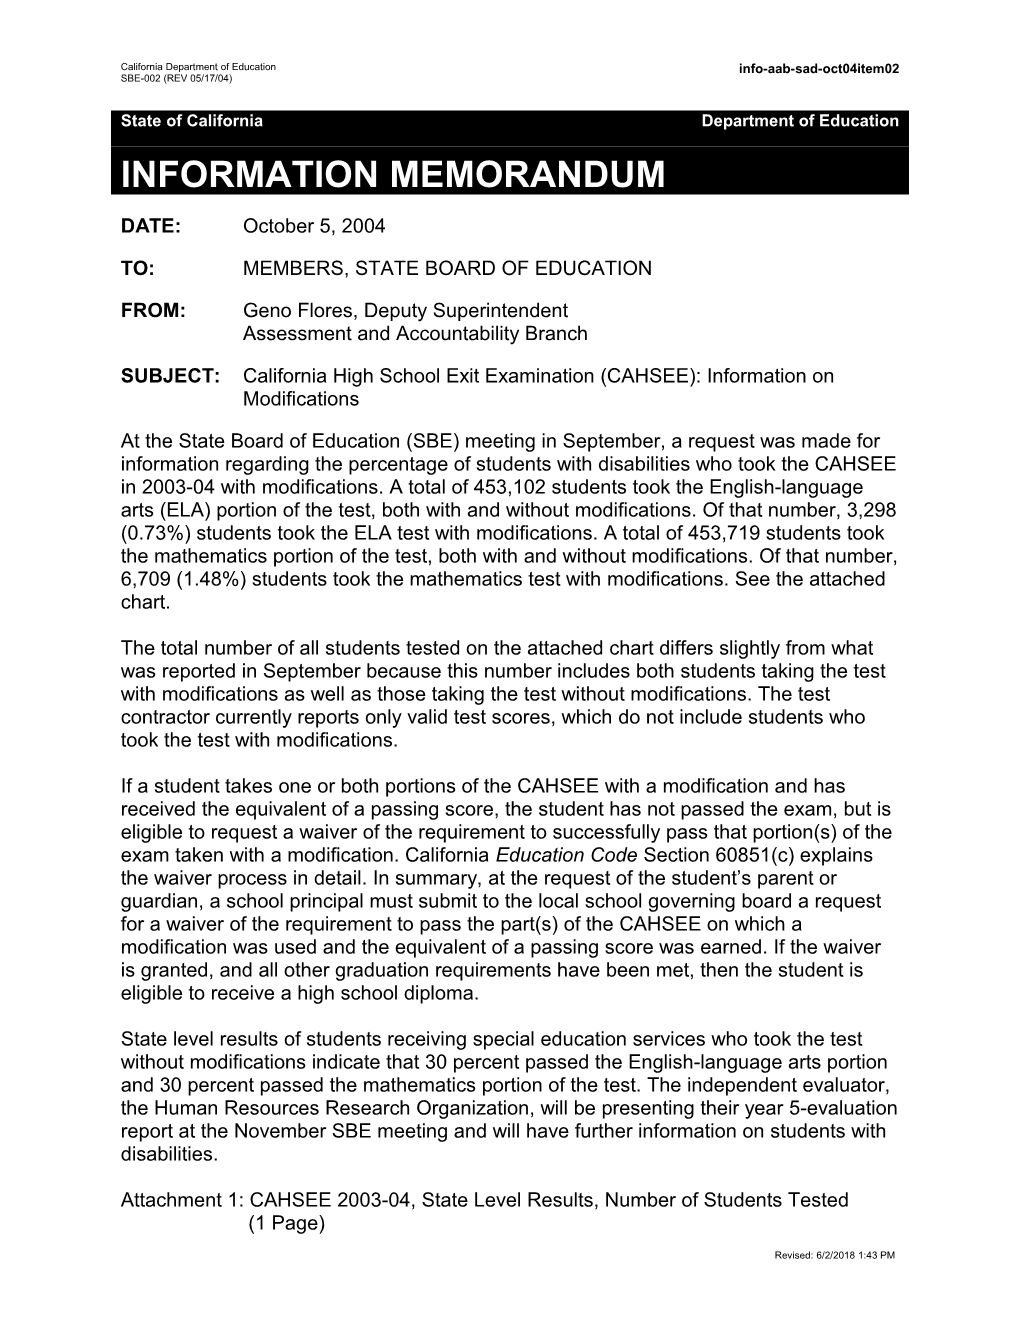 October 2004 SAD Item 2 - Information Memorandum (CA State Board of Education)